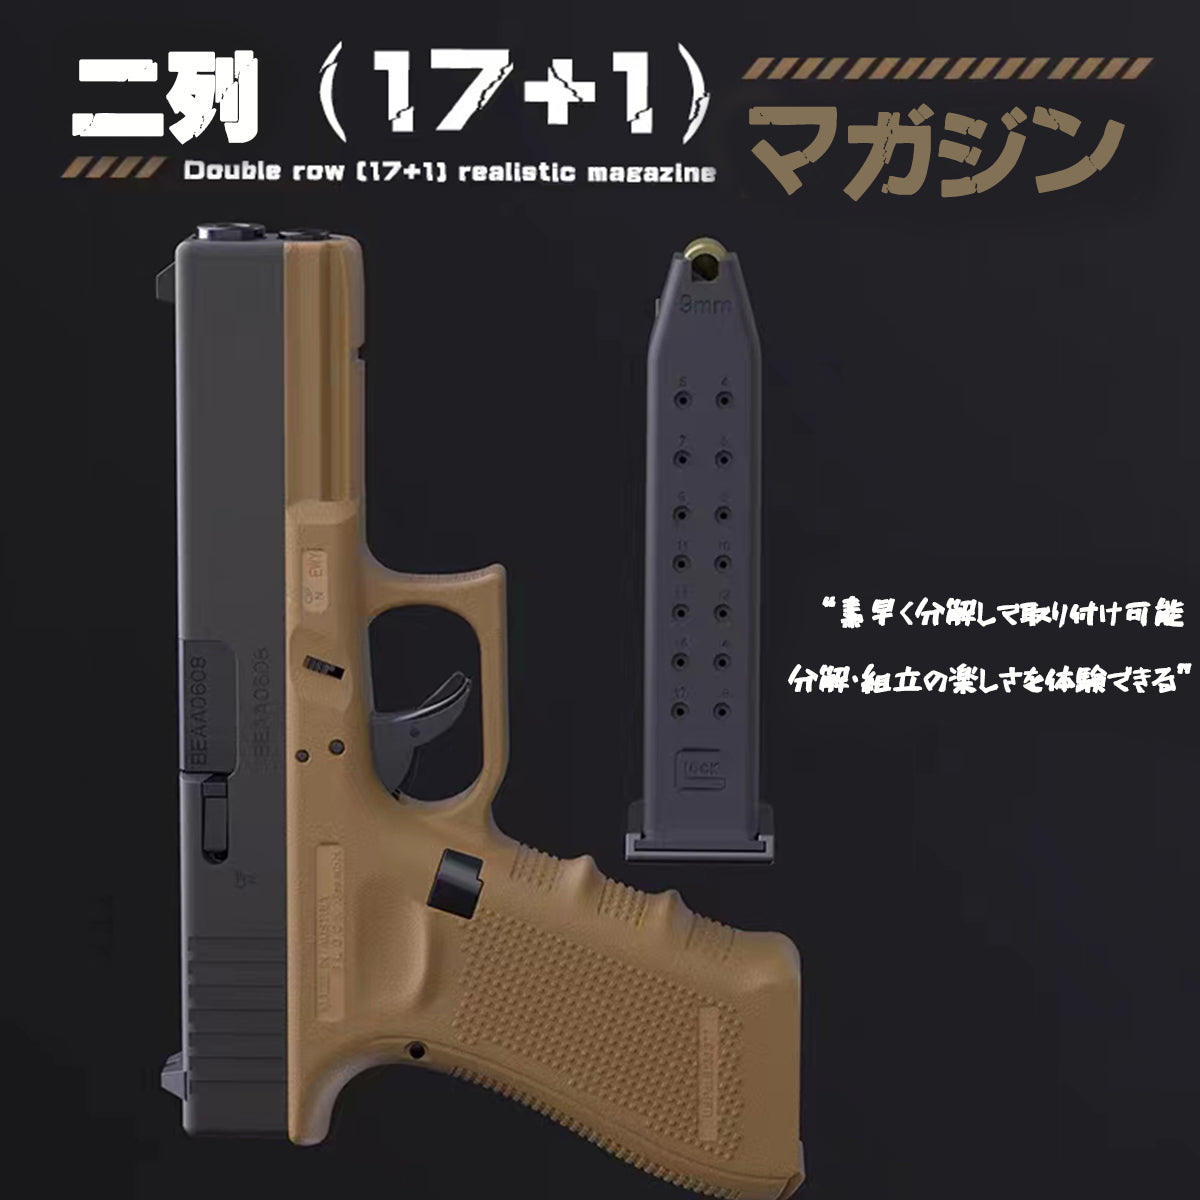 Glock17 gen4 フィンガーアクションブローバックトイガン ナーフ レーザー銃 排莢式  TPBモデルガン  模立方製